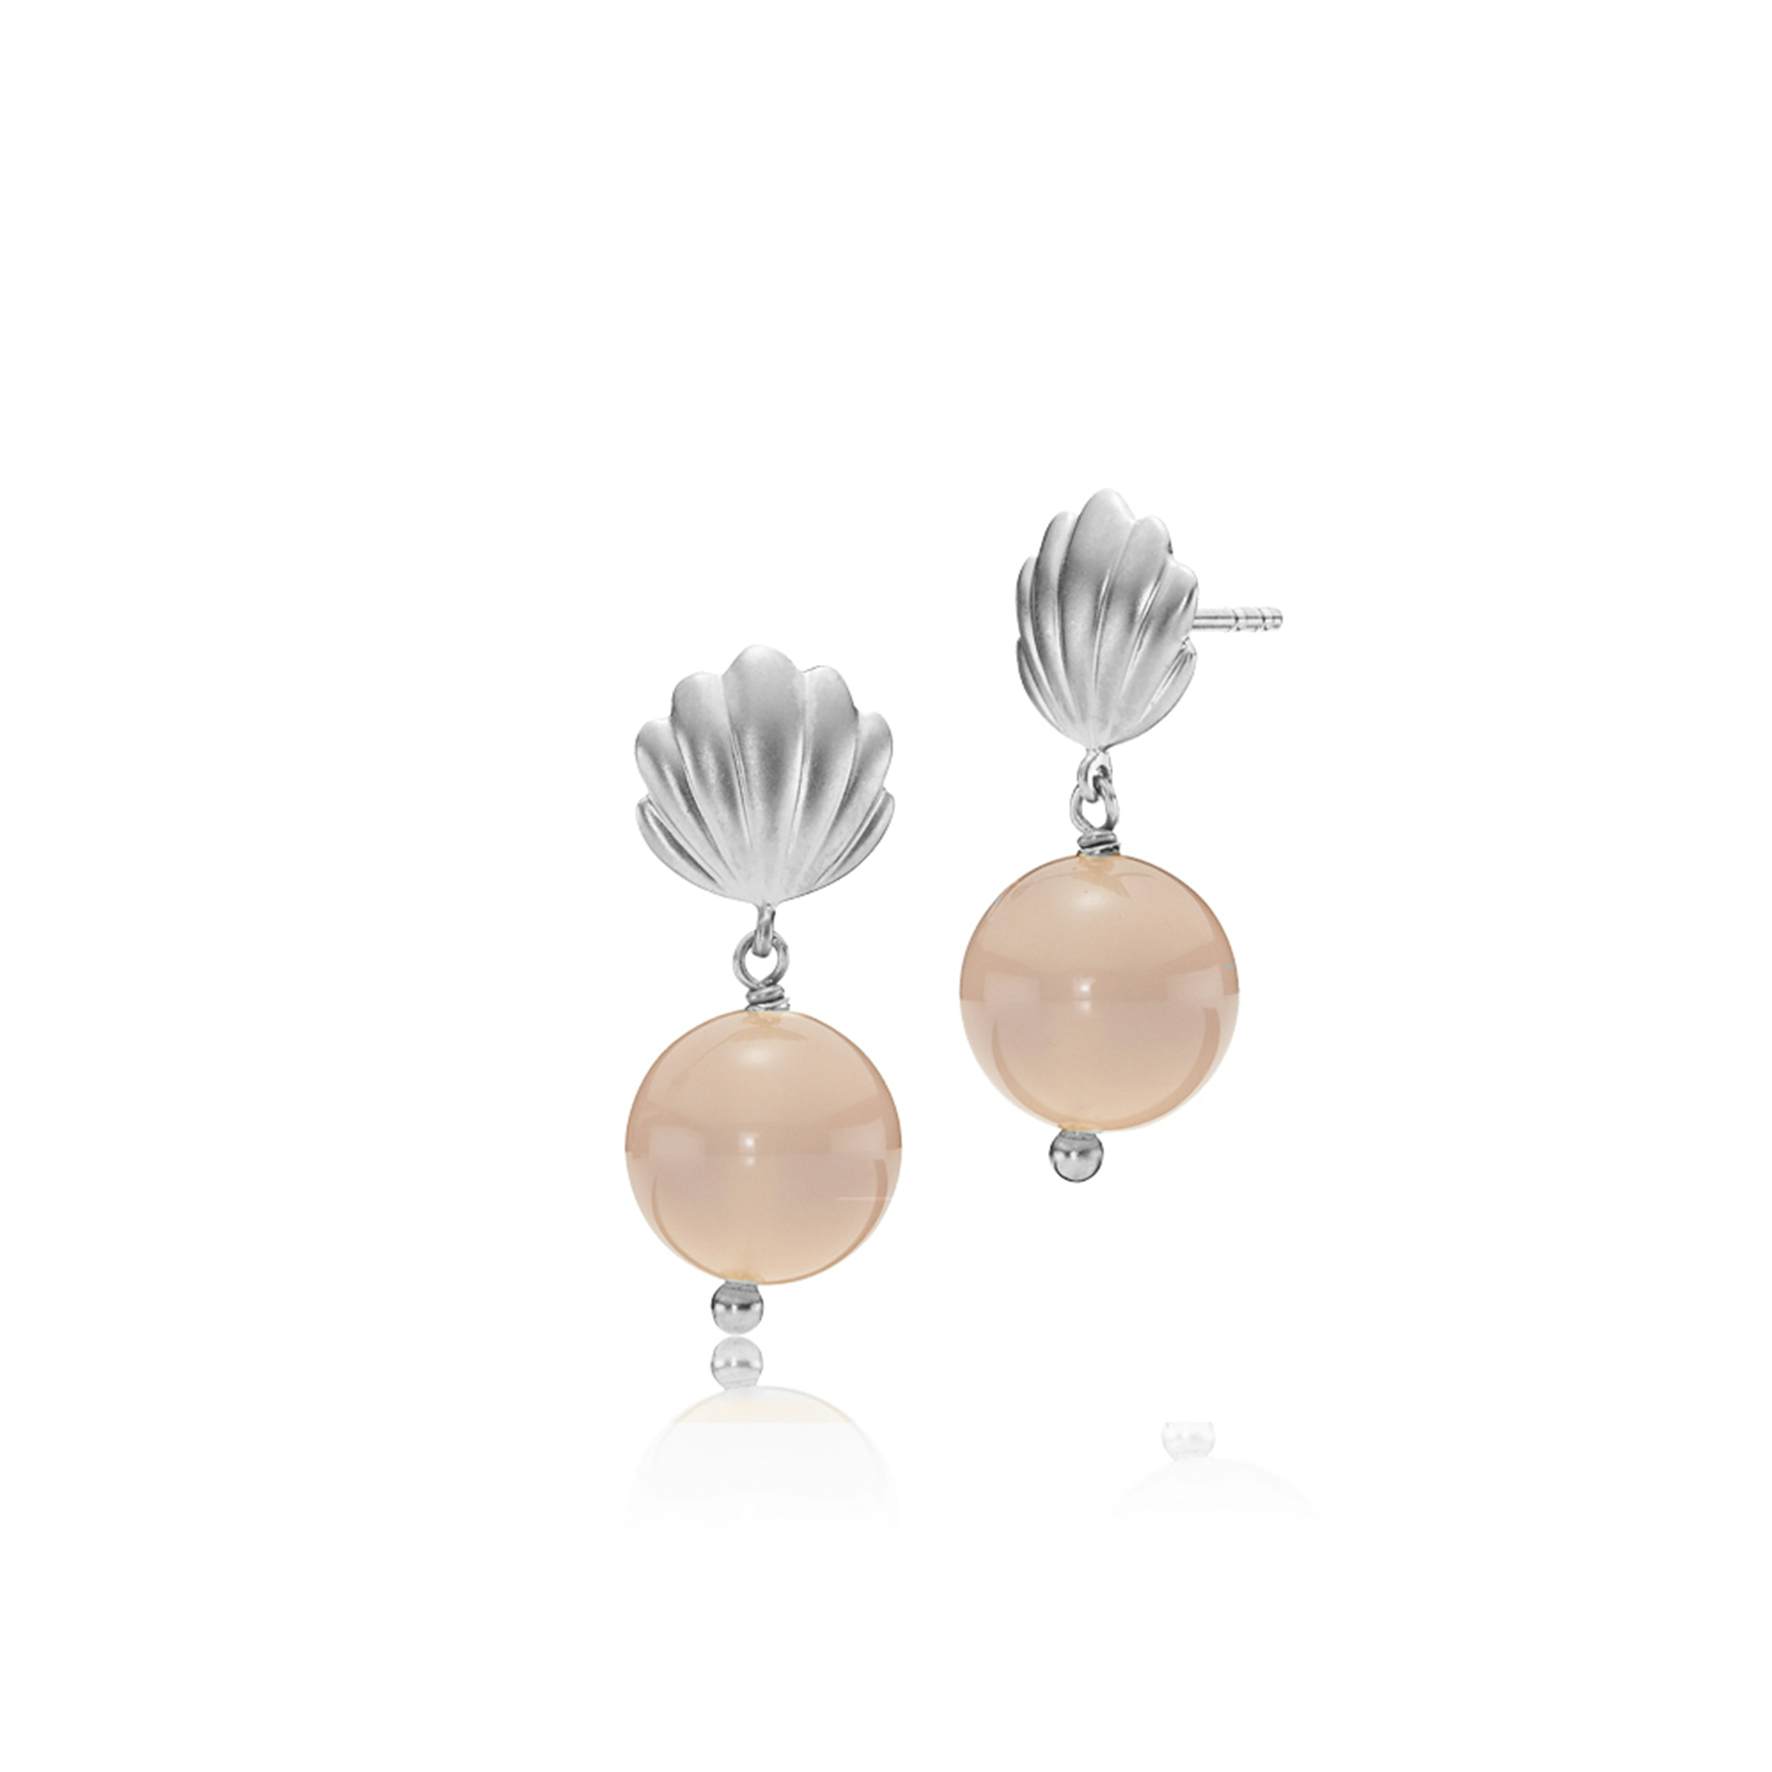 Isabella Pink Earrings von Izabel Camille in Silber Sterling 925